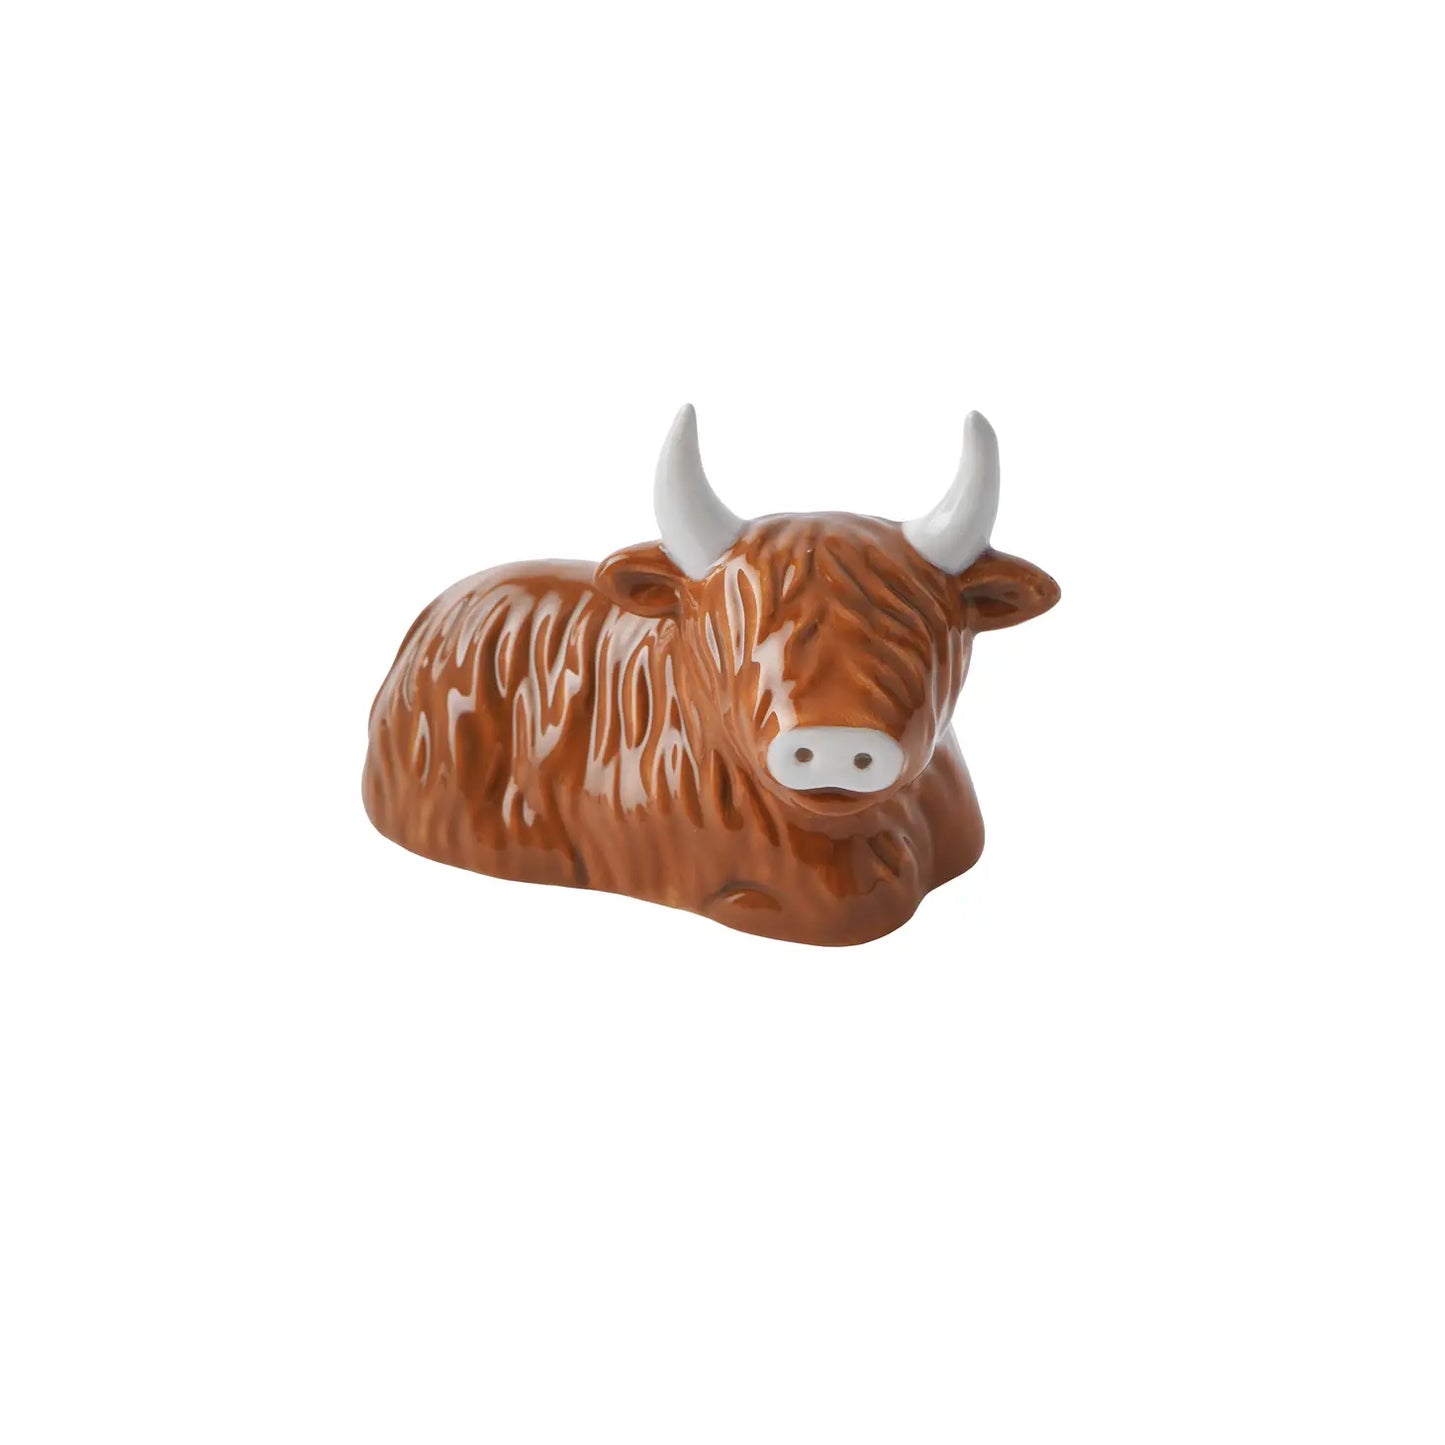 Ceramic highland cow ring holder